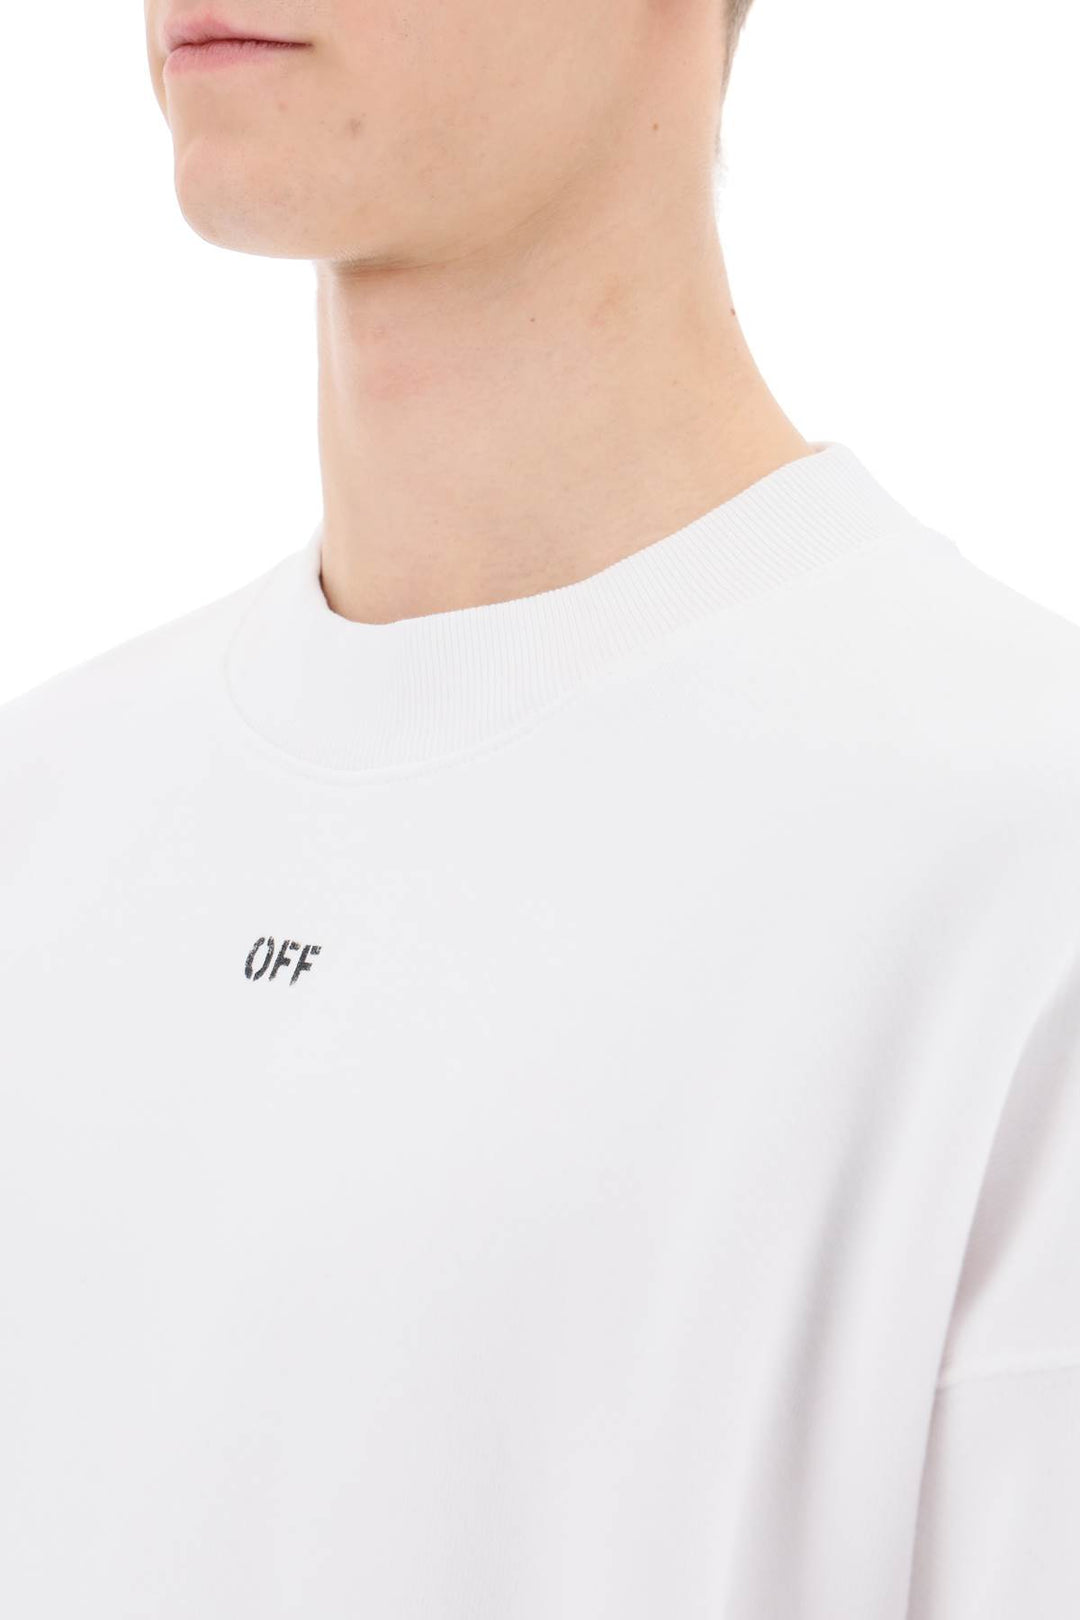 Off White Skate Sweatshirt With Off Logo   Bianco